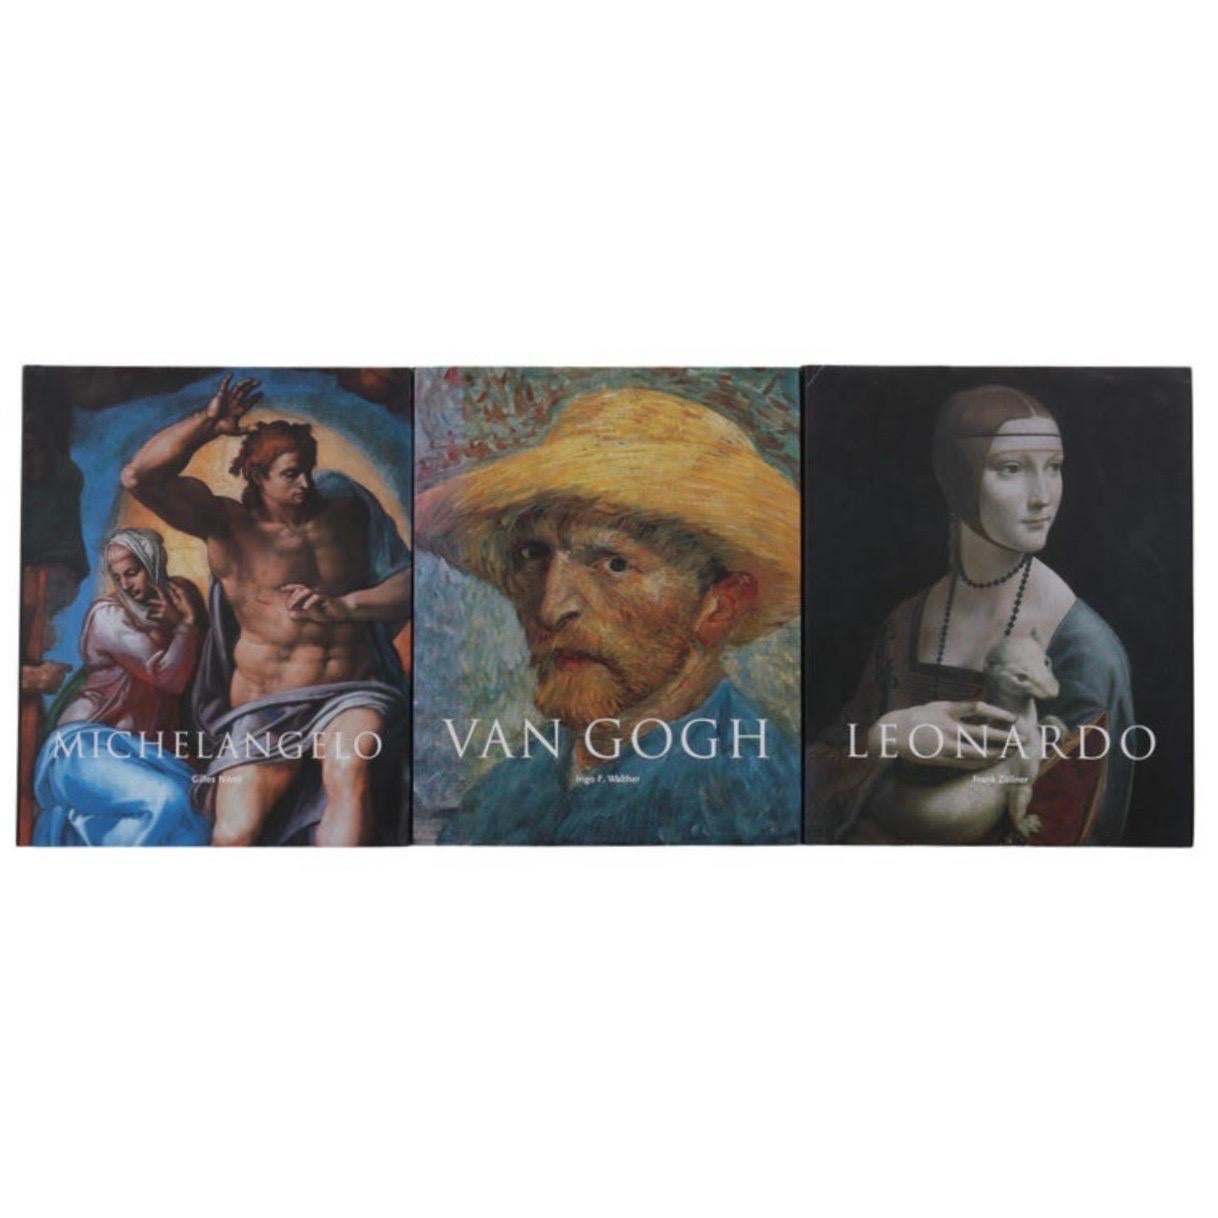 Leonardo, Michelangelo & Van Gogh Books For Sale